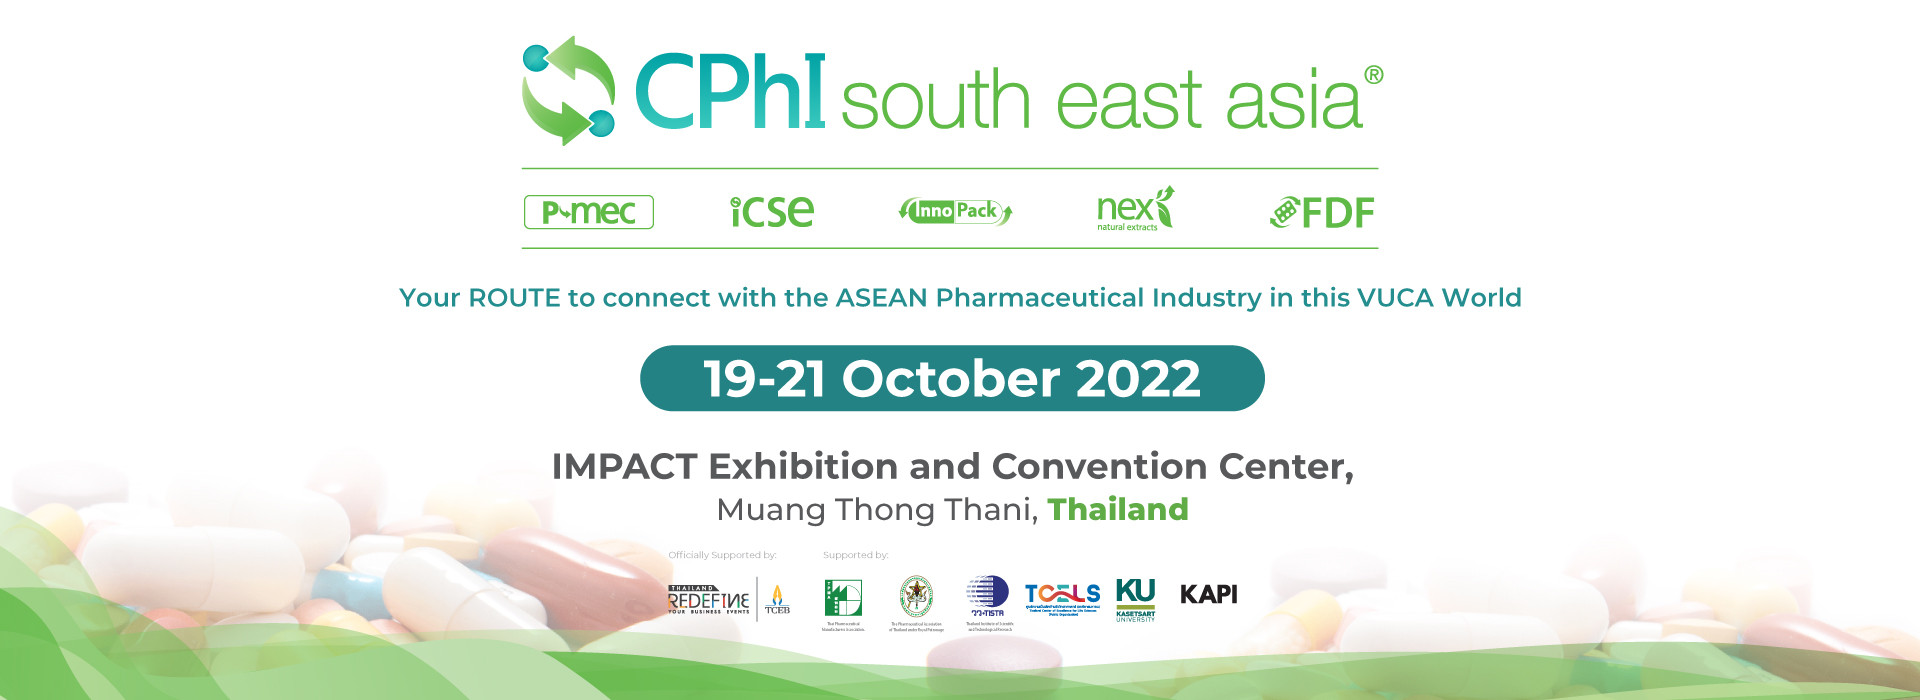 CPhI South East Asia 2022